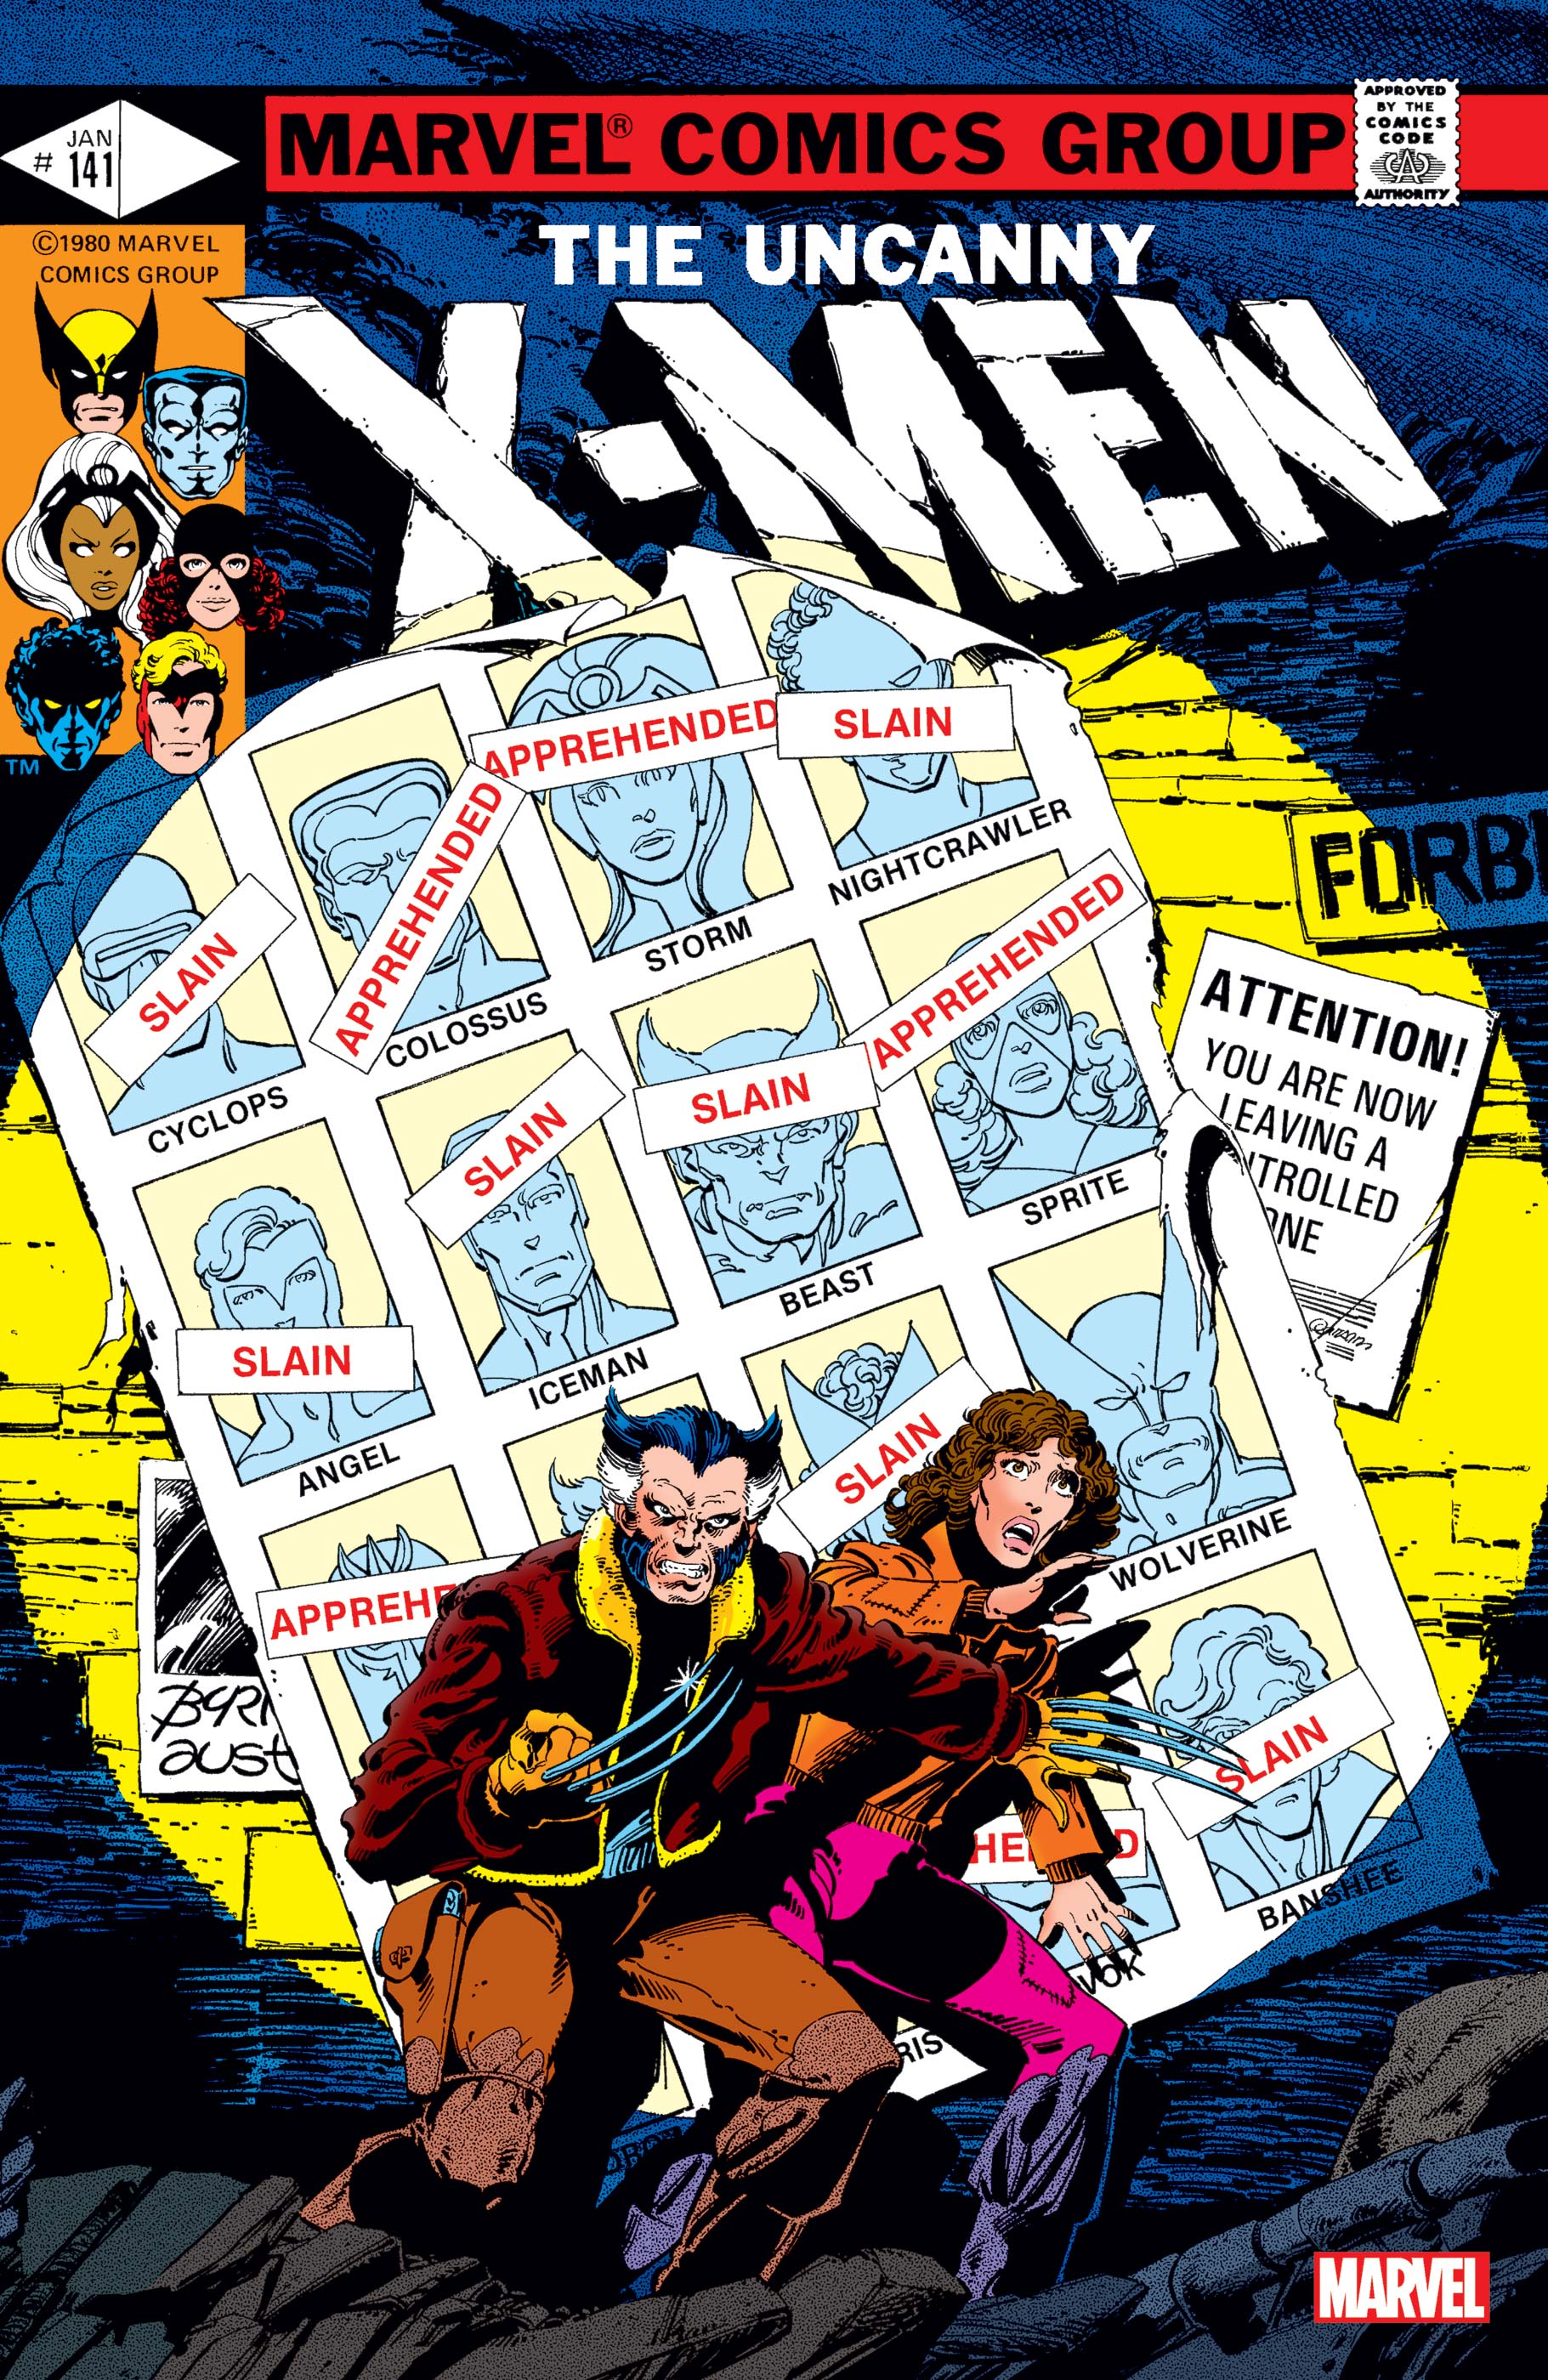 X-Men Facsimile Edition (2023) #141